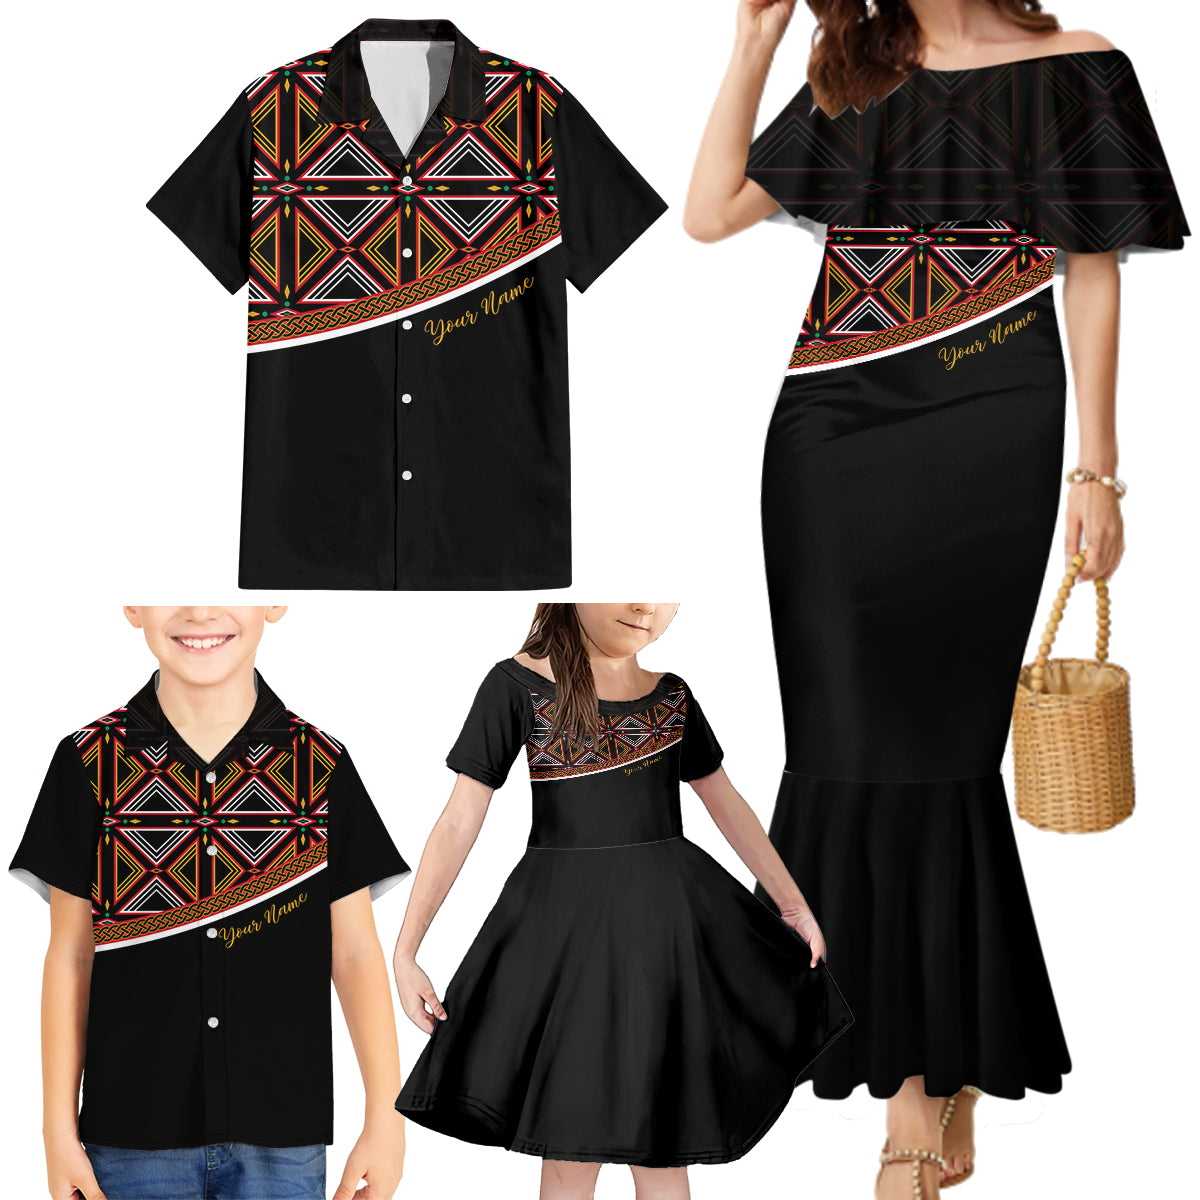 Personalized Bamenda African Family Matching Mermaid Dress and Hawaiian Shirt Atoghu Cameroon Print